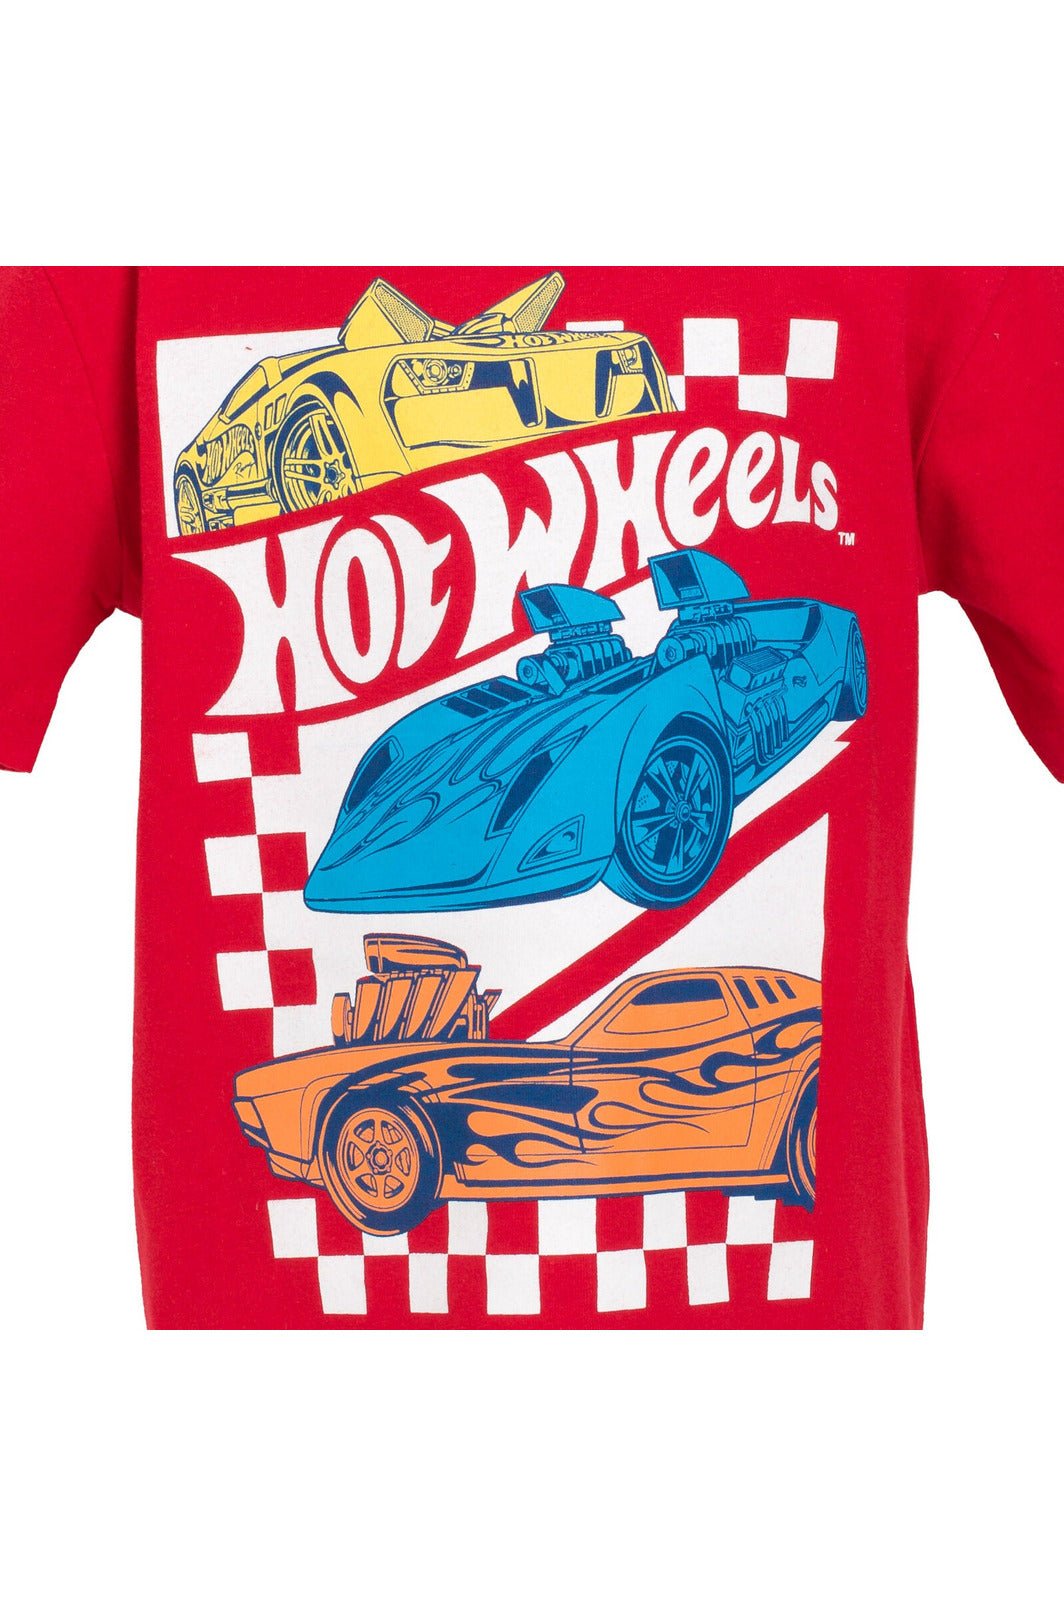 Hot Wheels Short Sleeve Graphic T-Shirt - imagikids